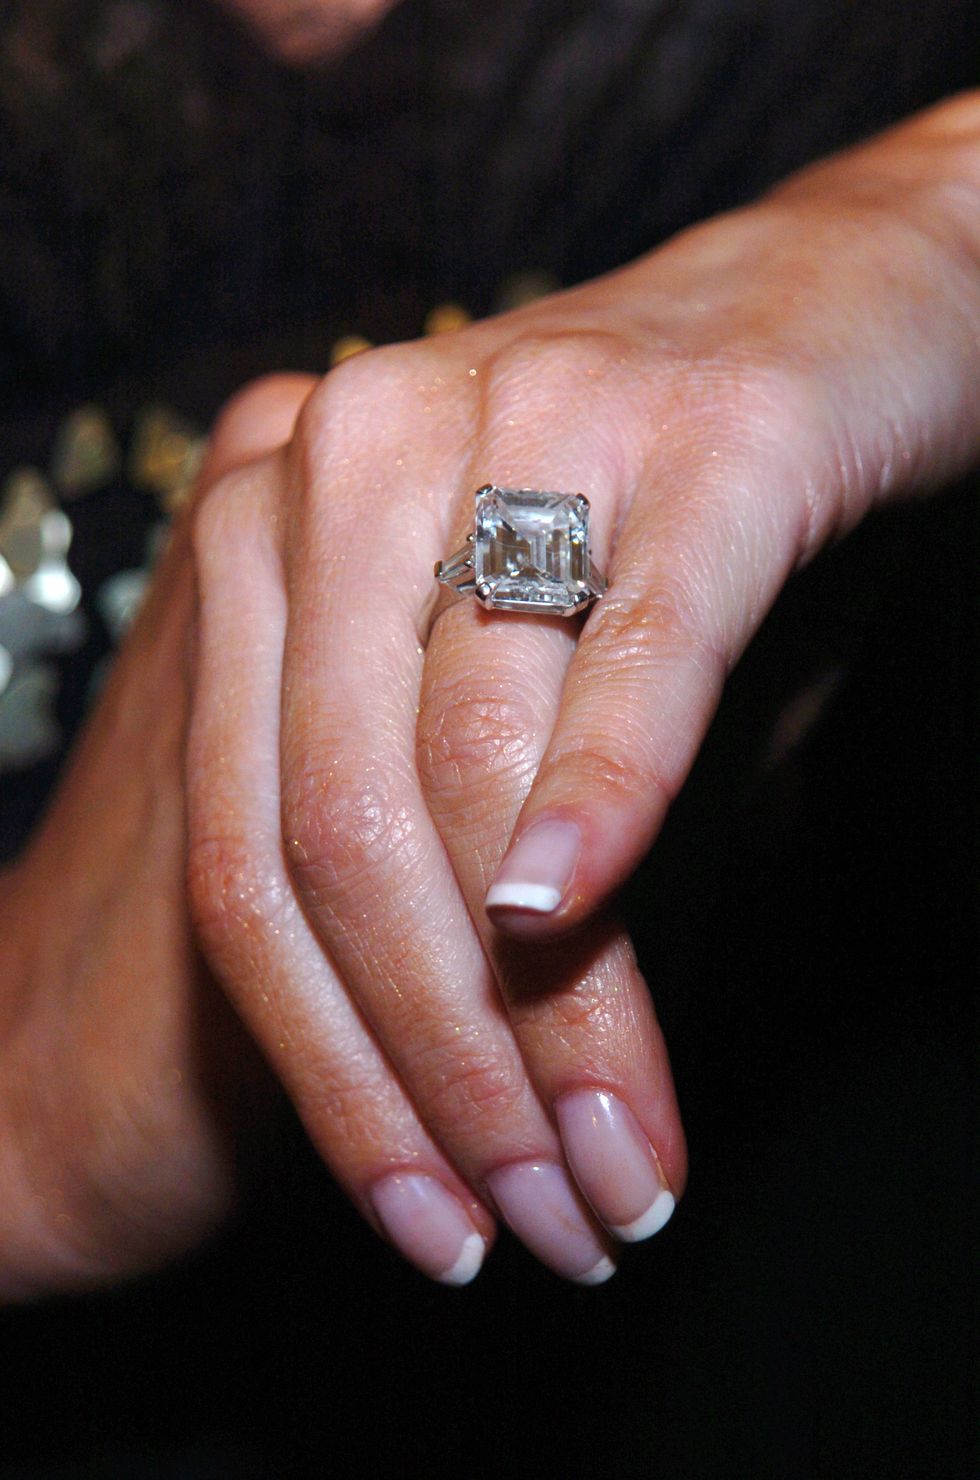 Finger, Jewellery, Skin, Hand, Engagement ring, Pre-engagement ring, Ring, Wedding ring, Nail, Fashion accessory, 